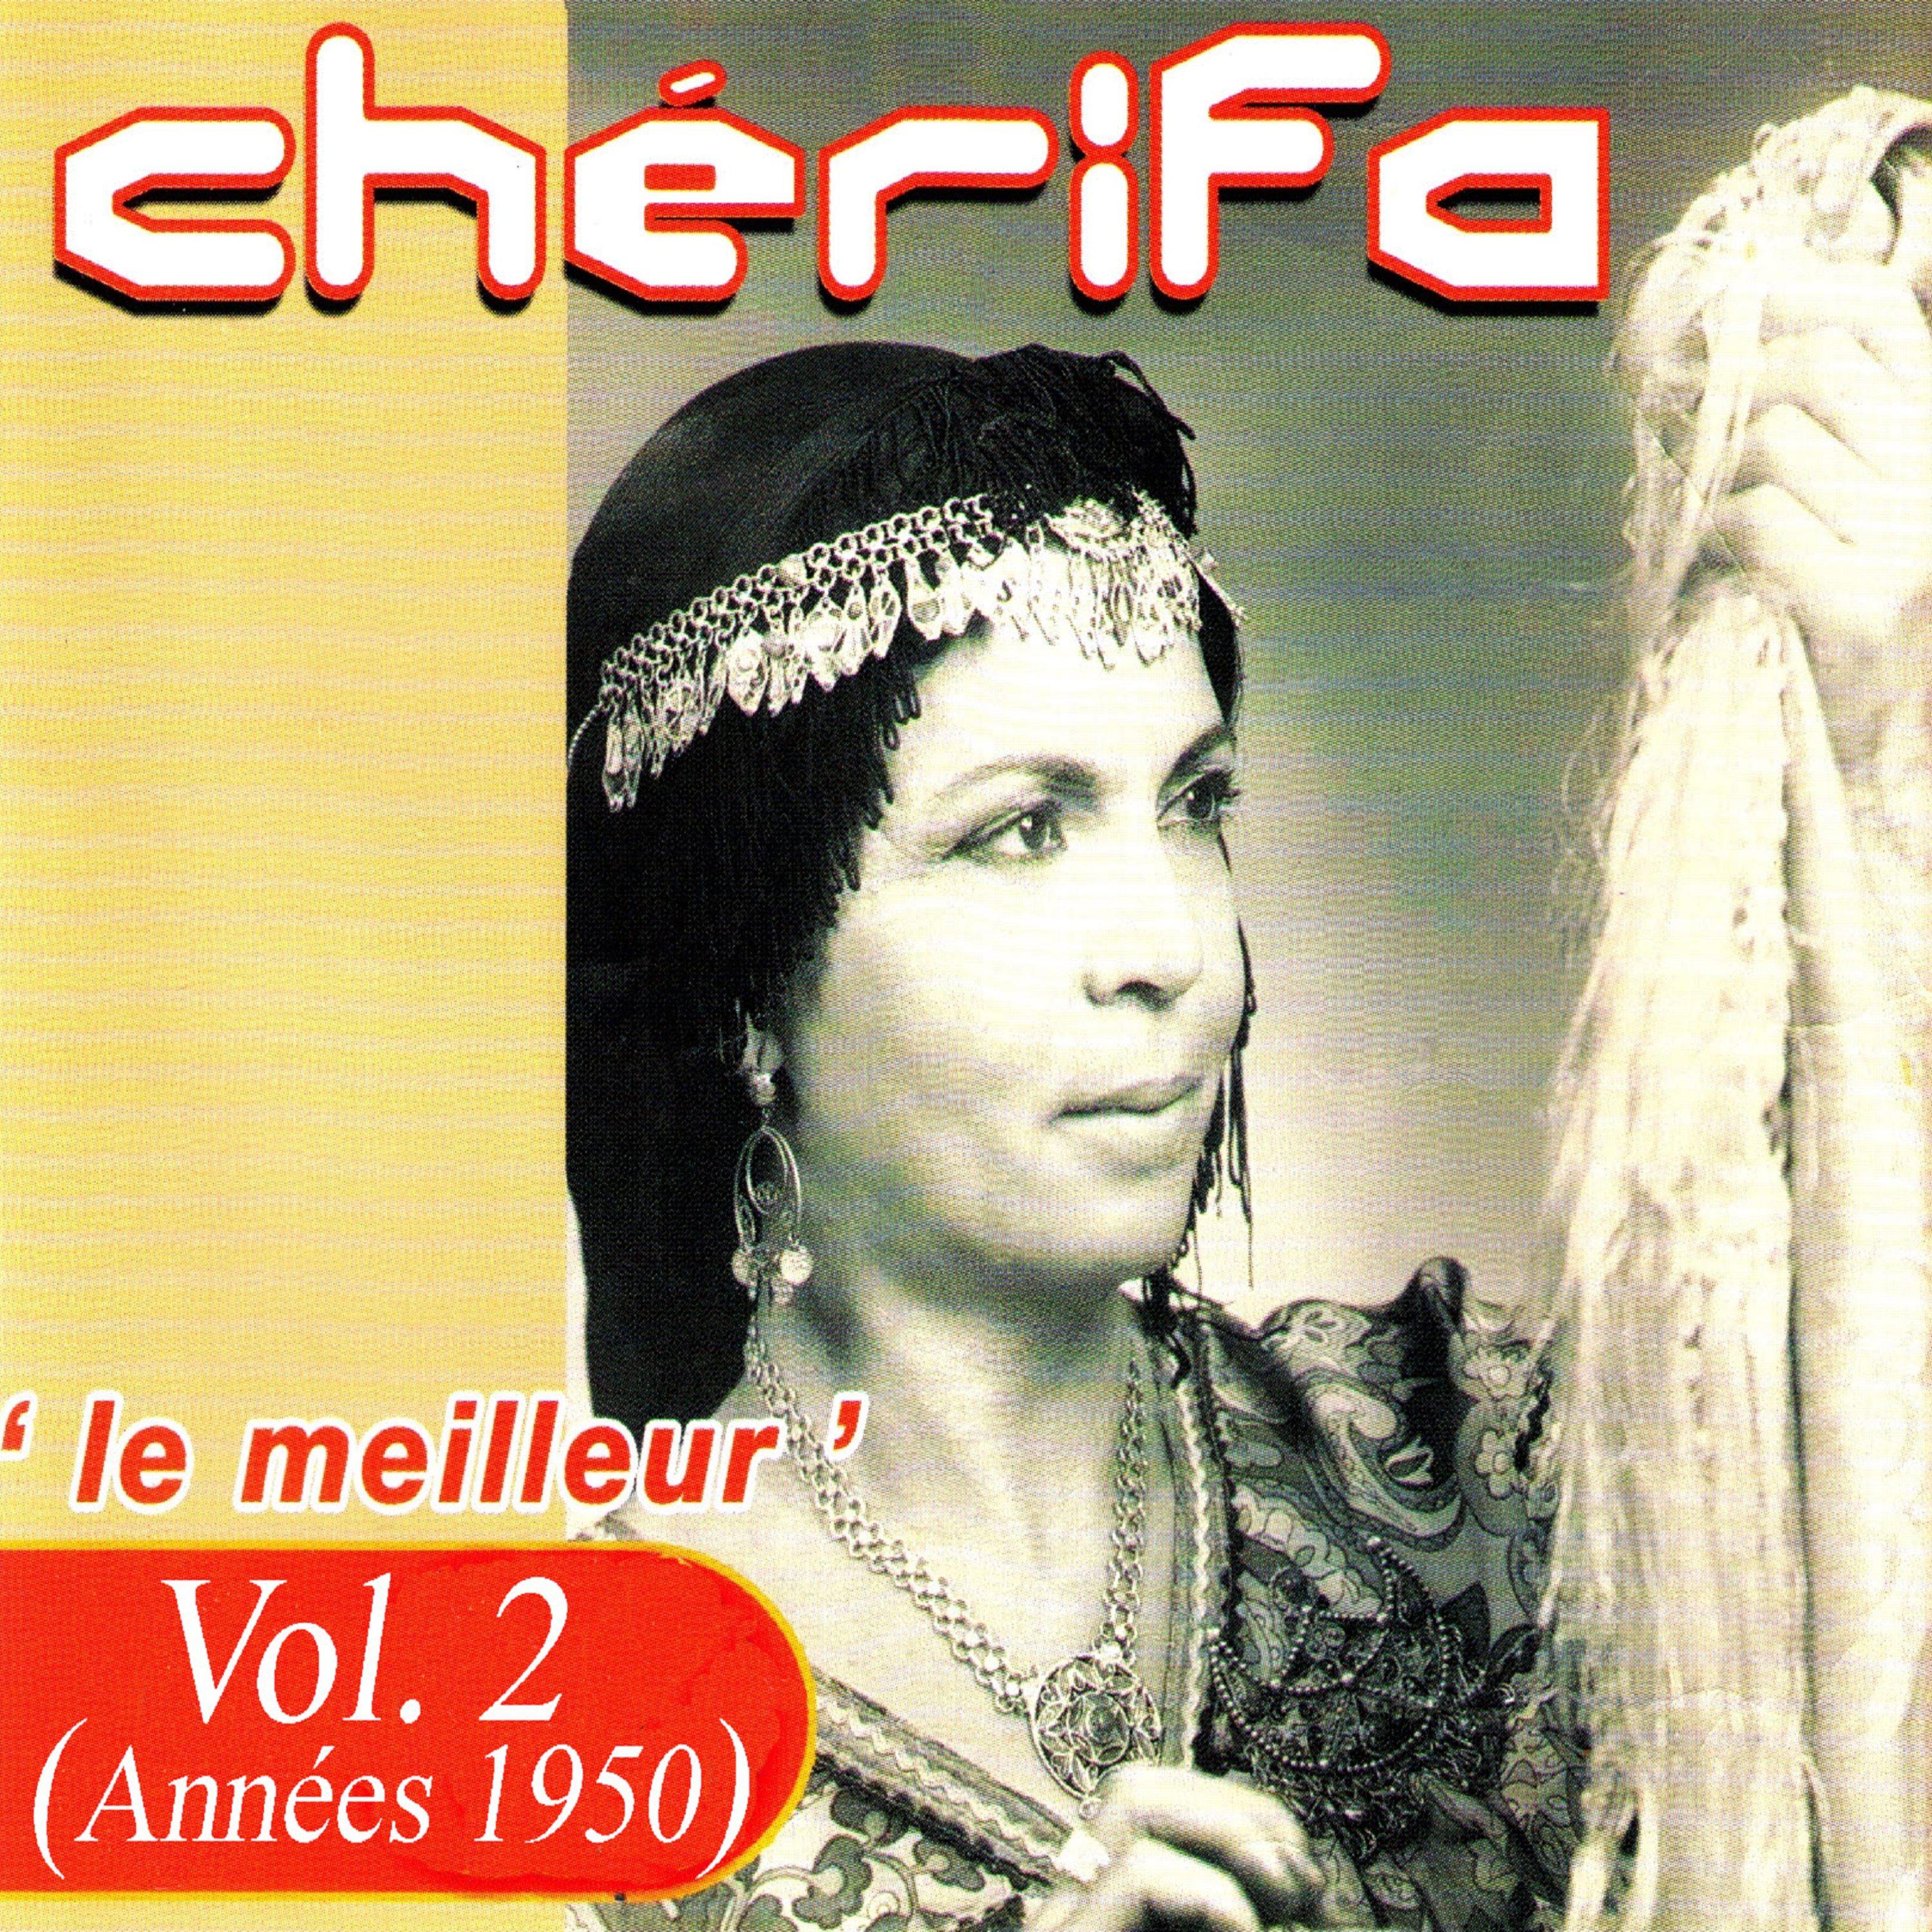 Chérifa - Elqed atezanets